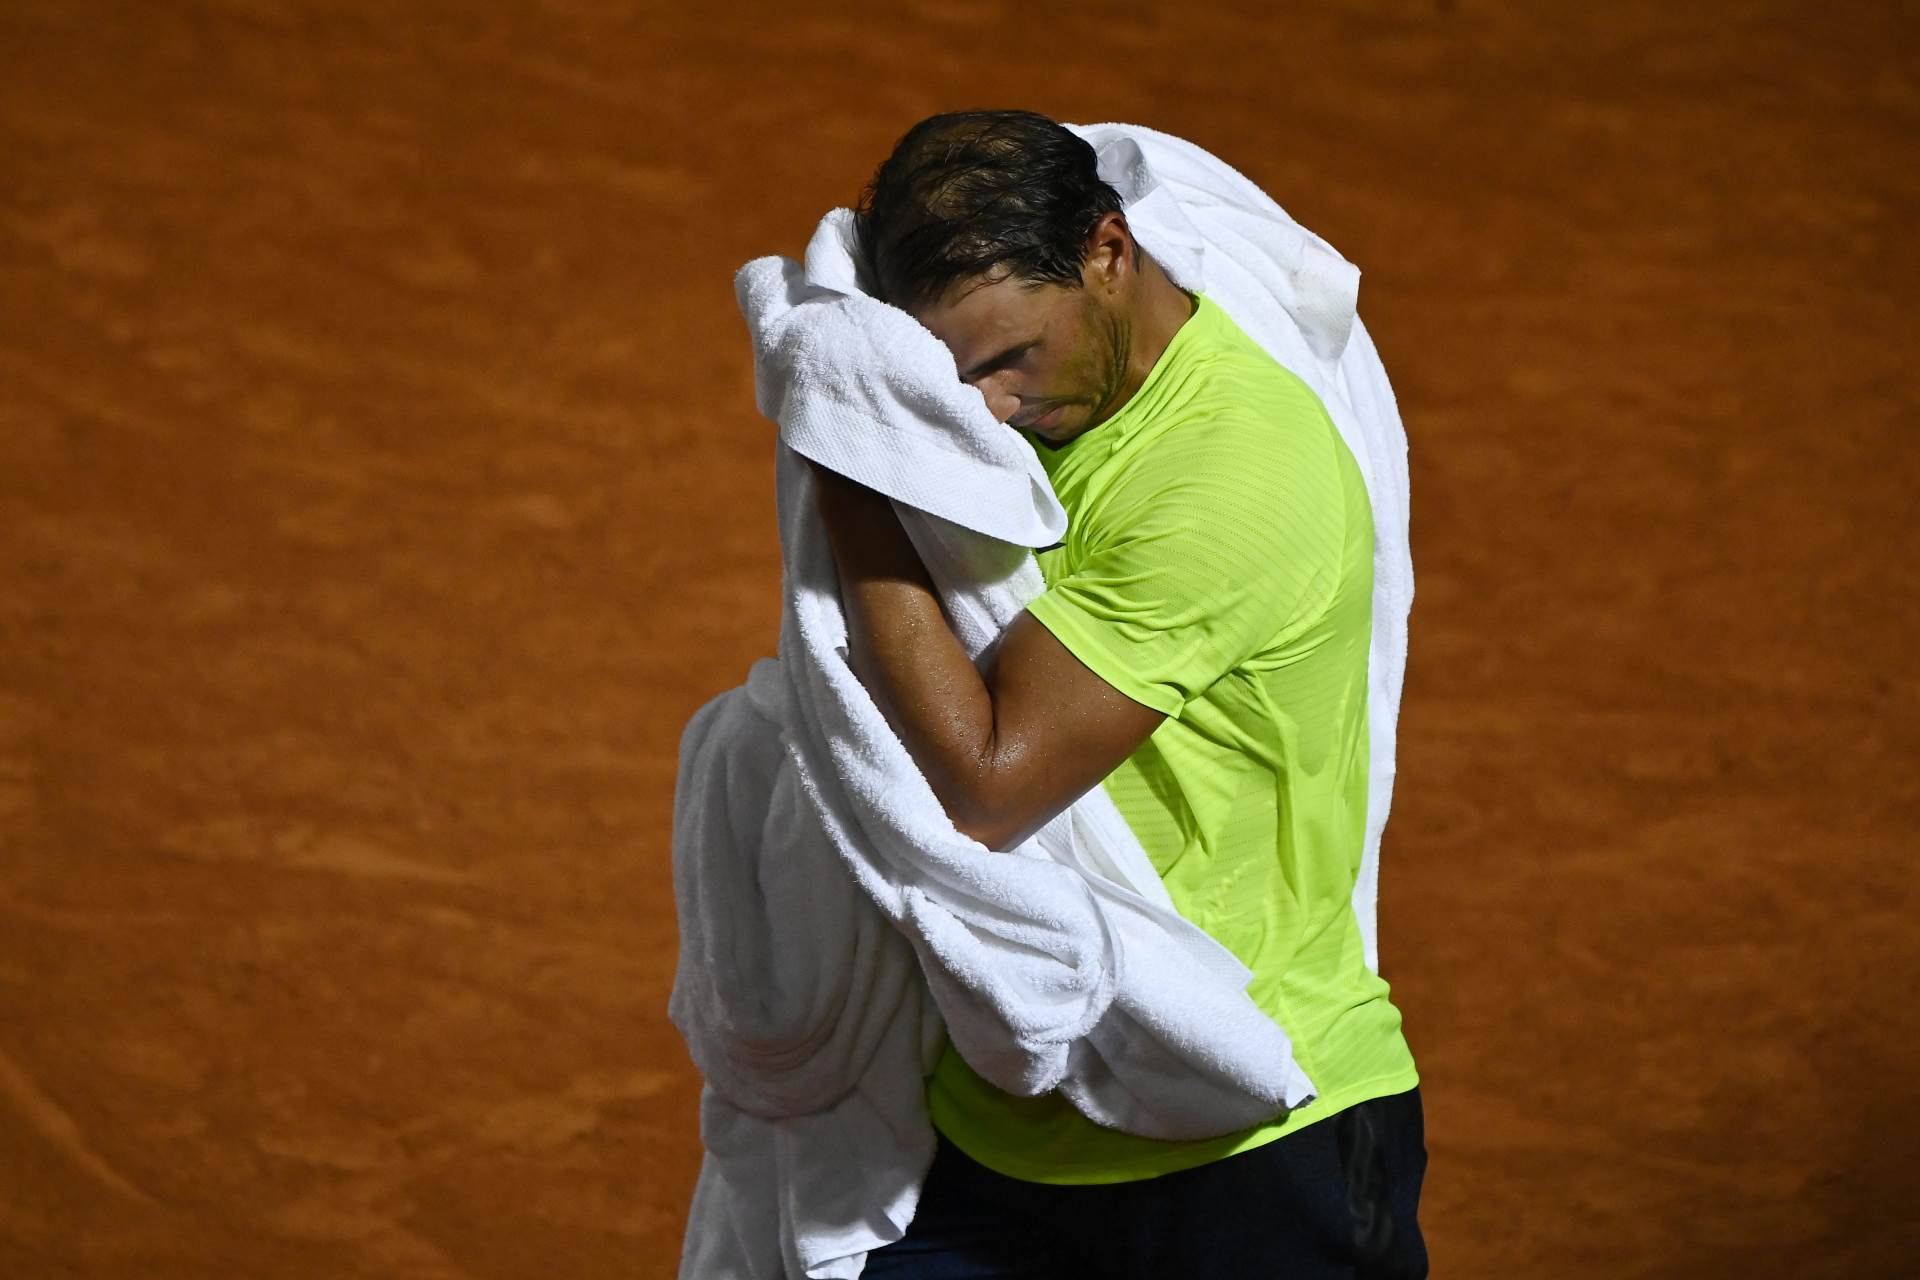  Novak-Djokovic-Rafael-Nadal-je-pobediv-na-sljaci-Rolan-Garos-drugaciji-uslovi-grend-slem 